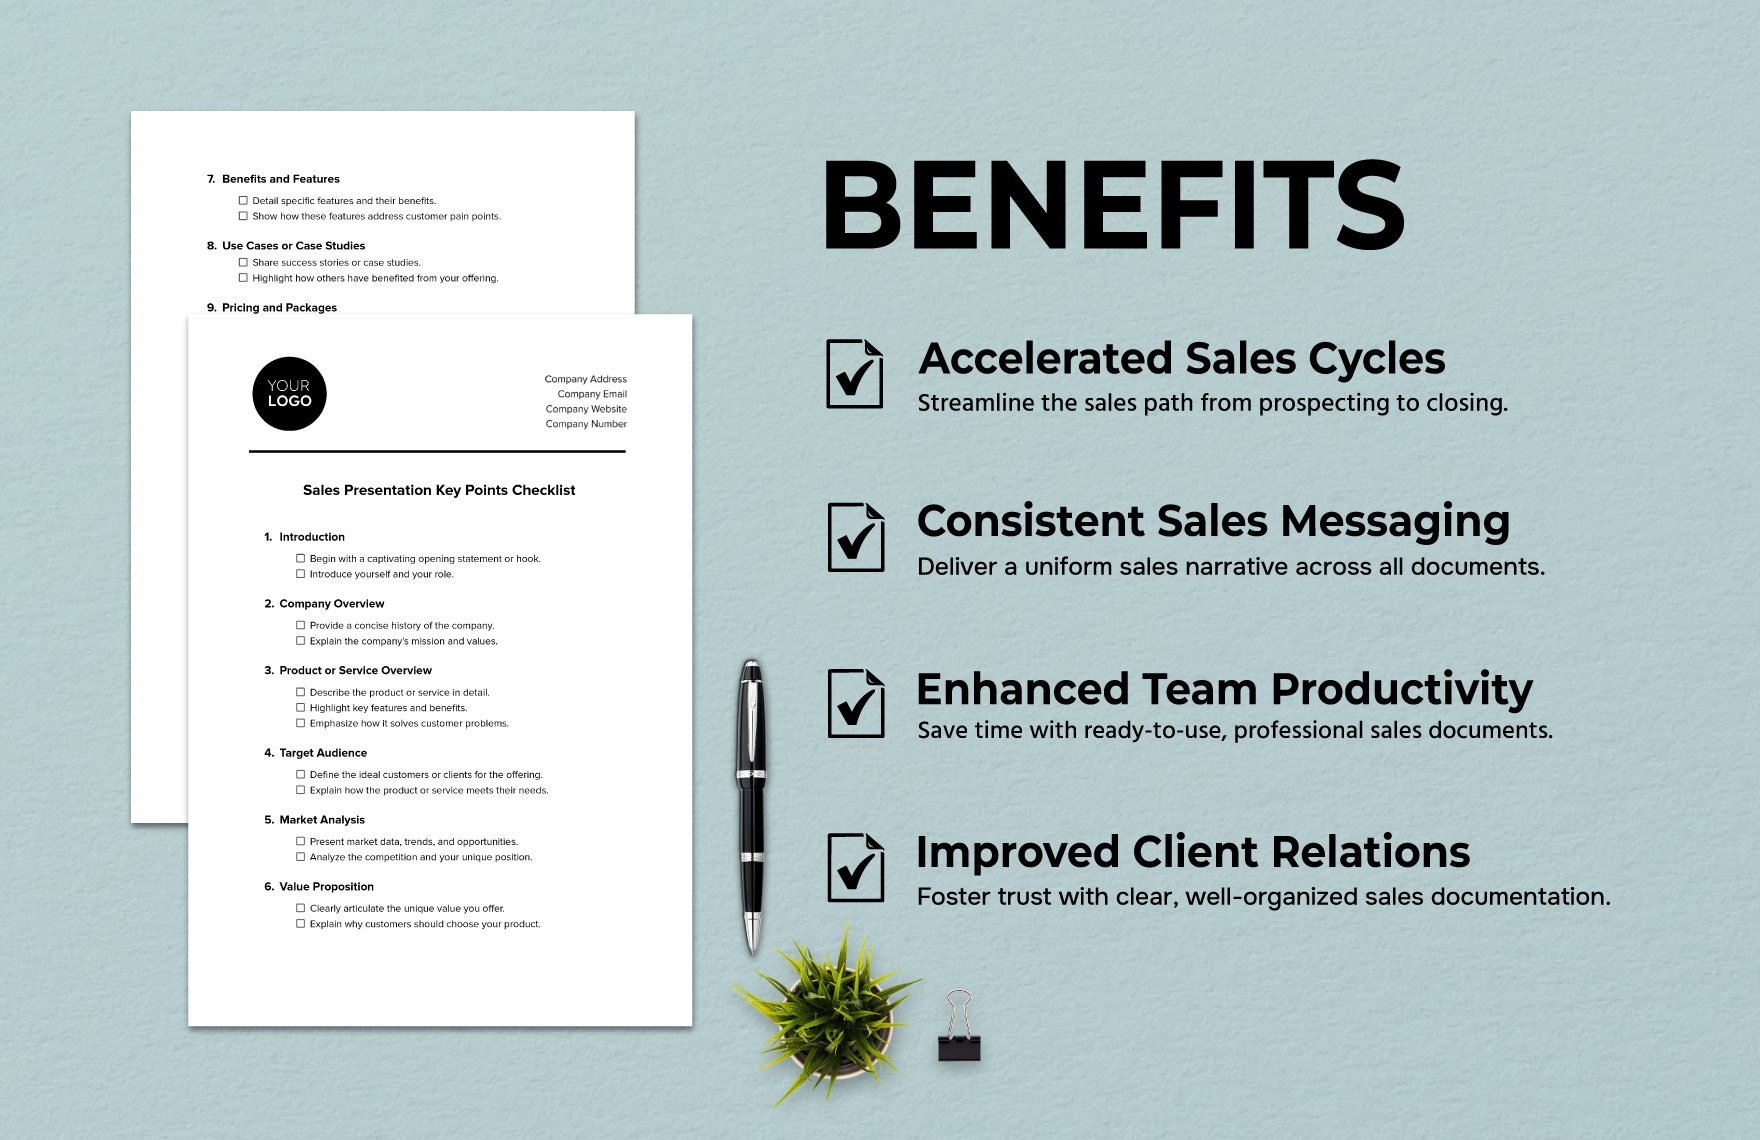 Sales Presentation Key Points Checklist Template